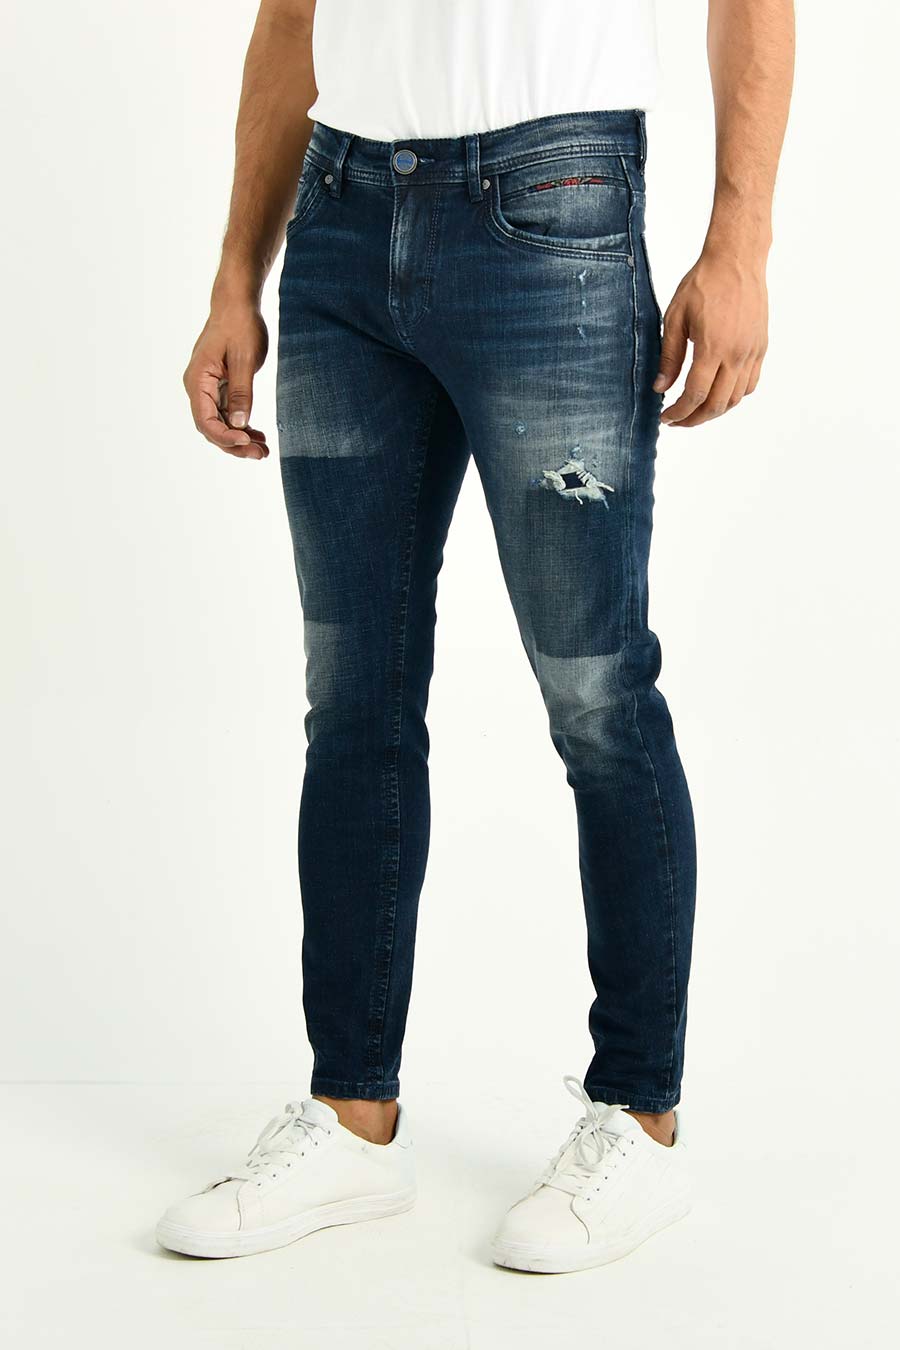 Men’s Denim Jeans-RJ3997